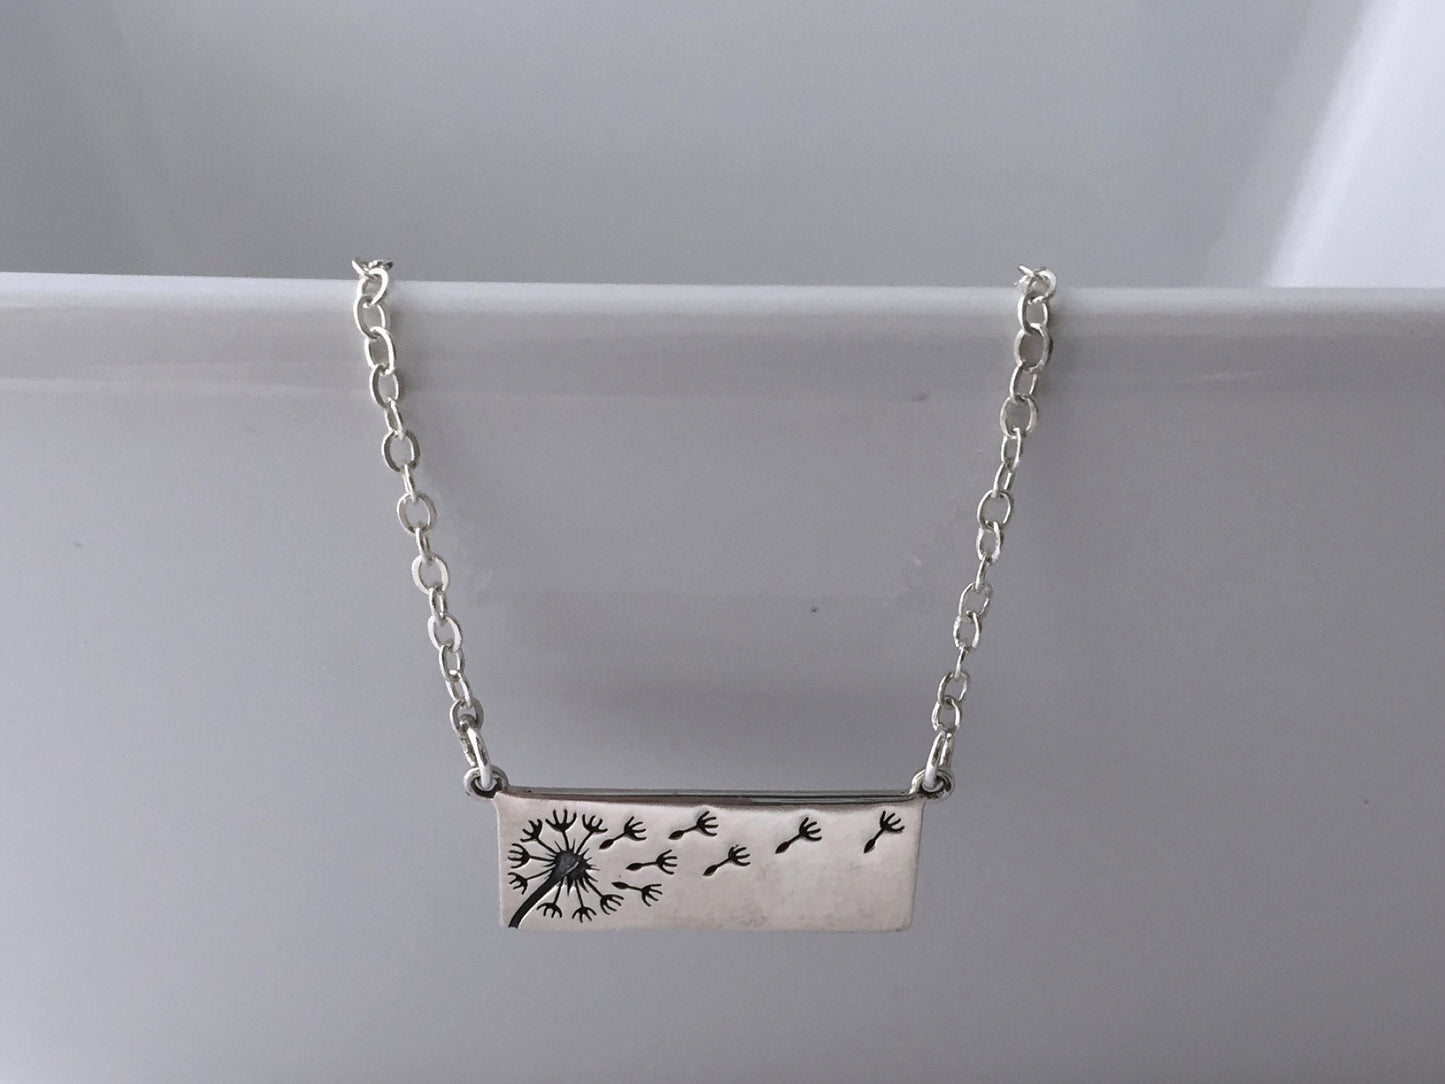 Dandelion Sterling Silver Pendant Necklace